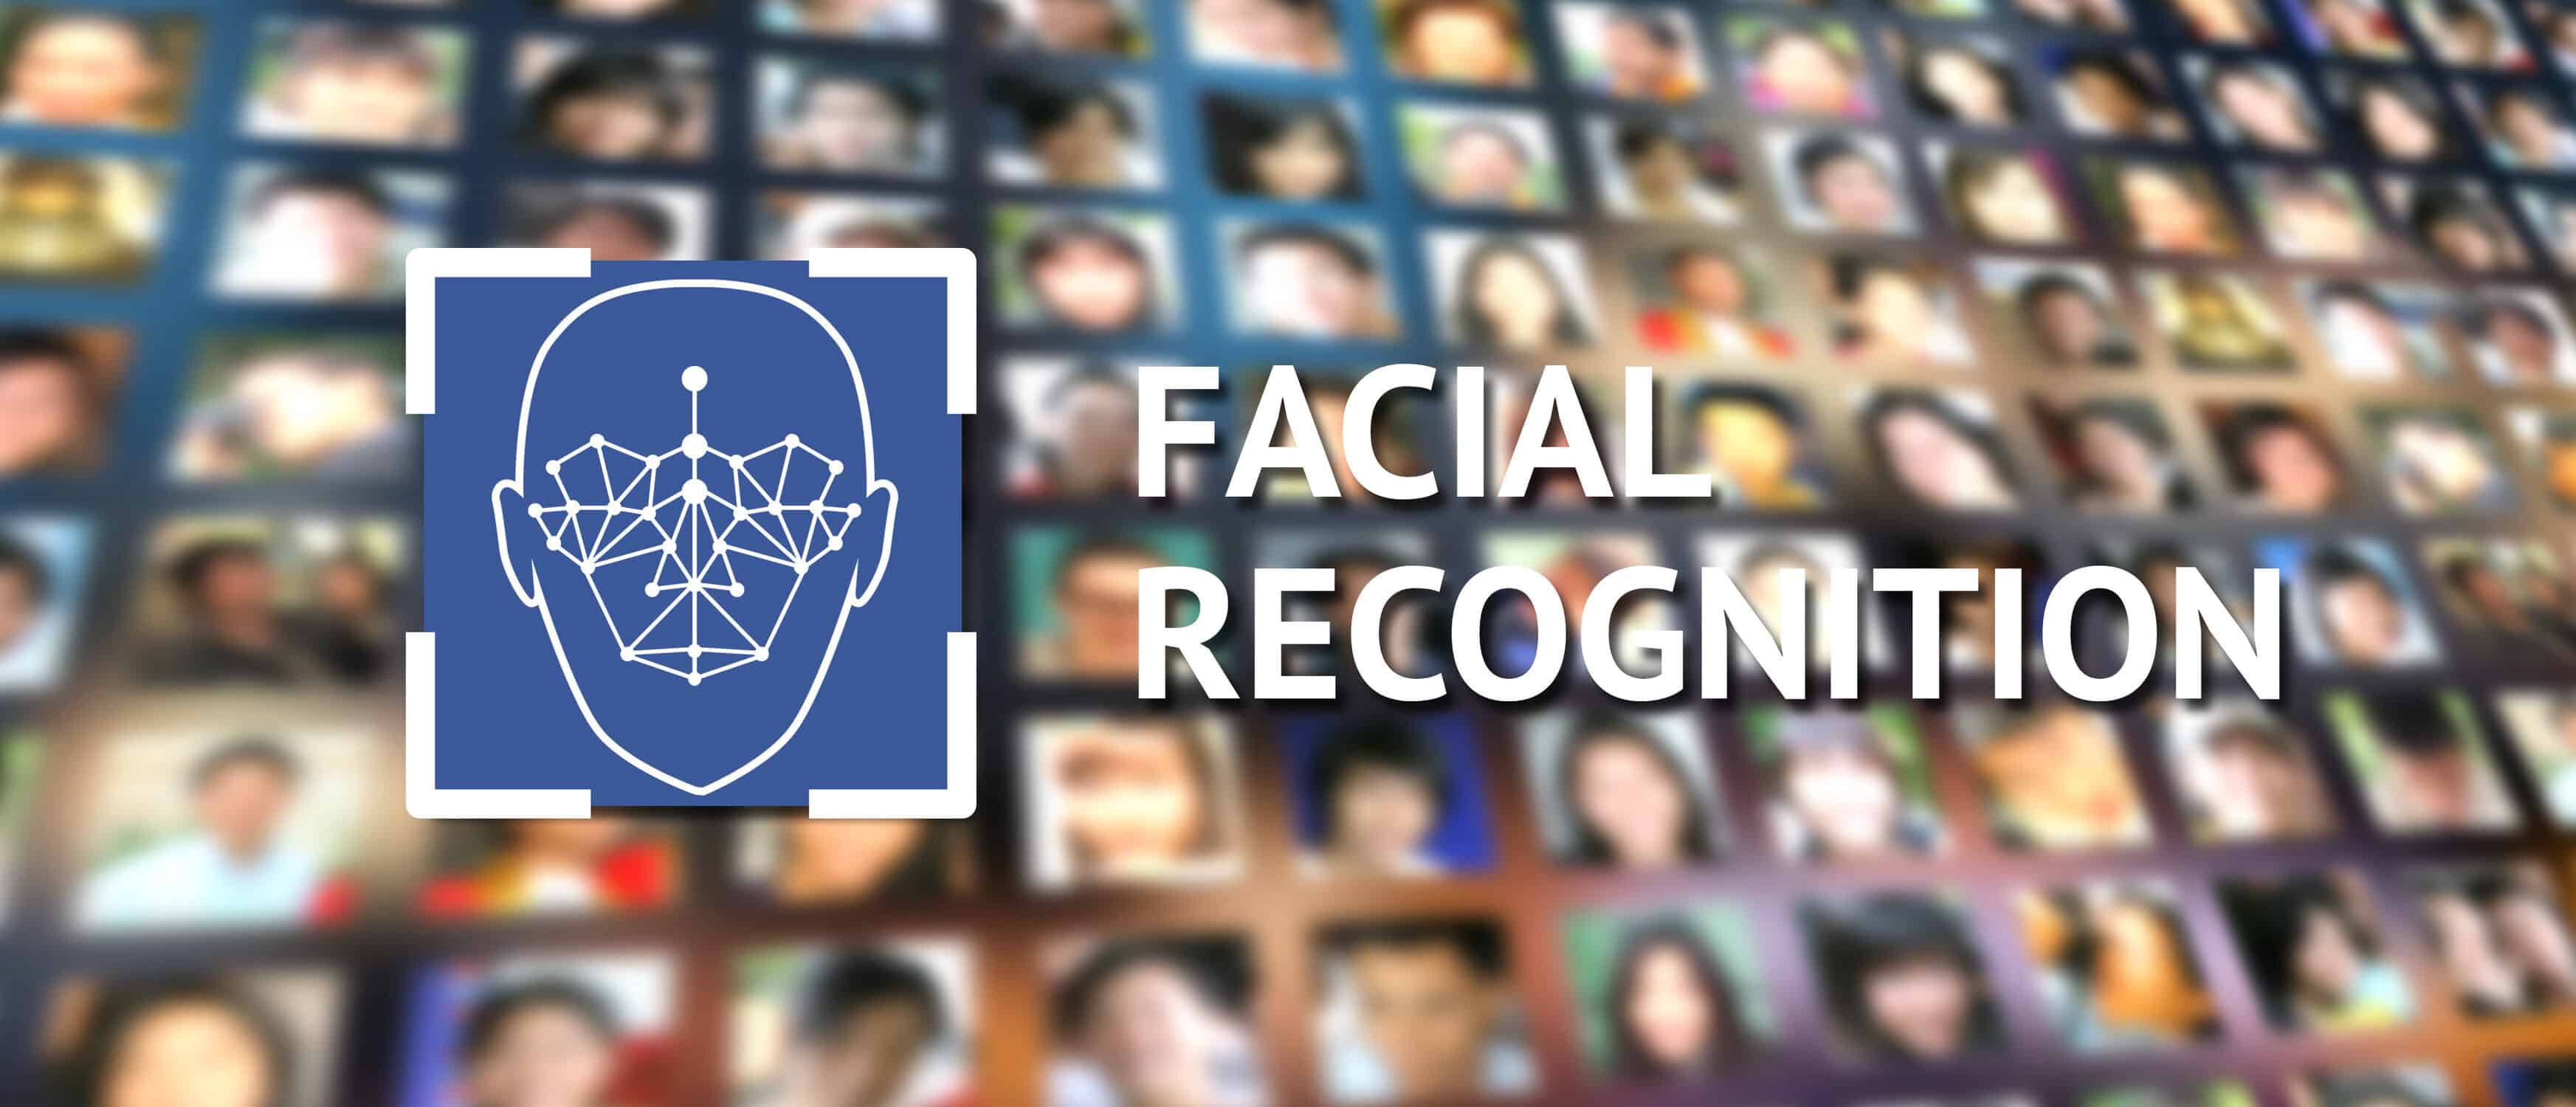 Social Media Sites Applying Facial Recognition e1566142479862